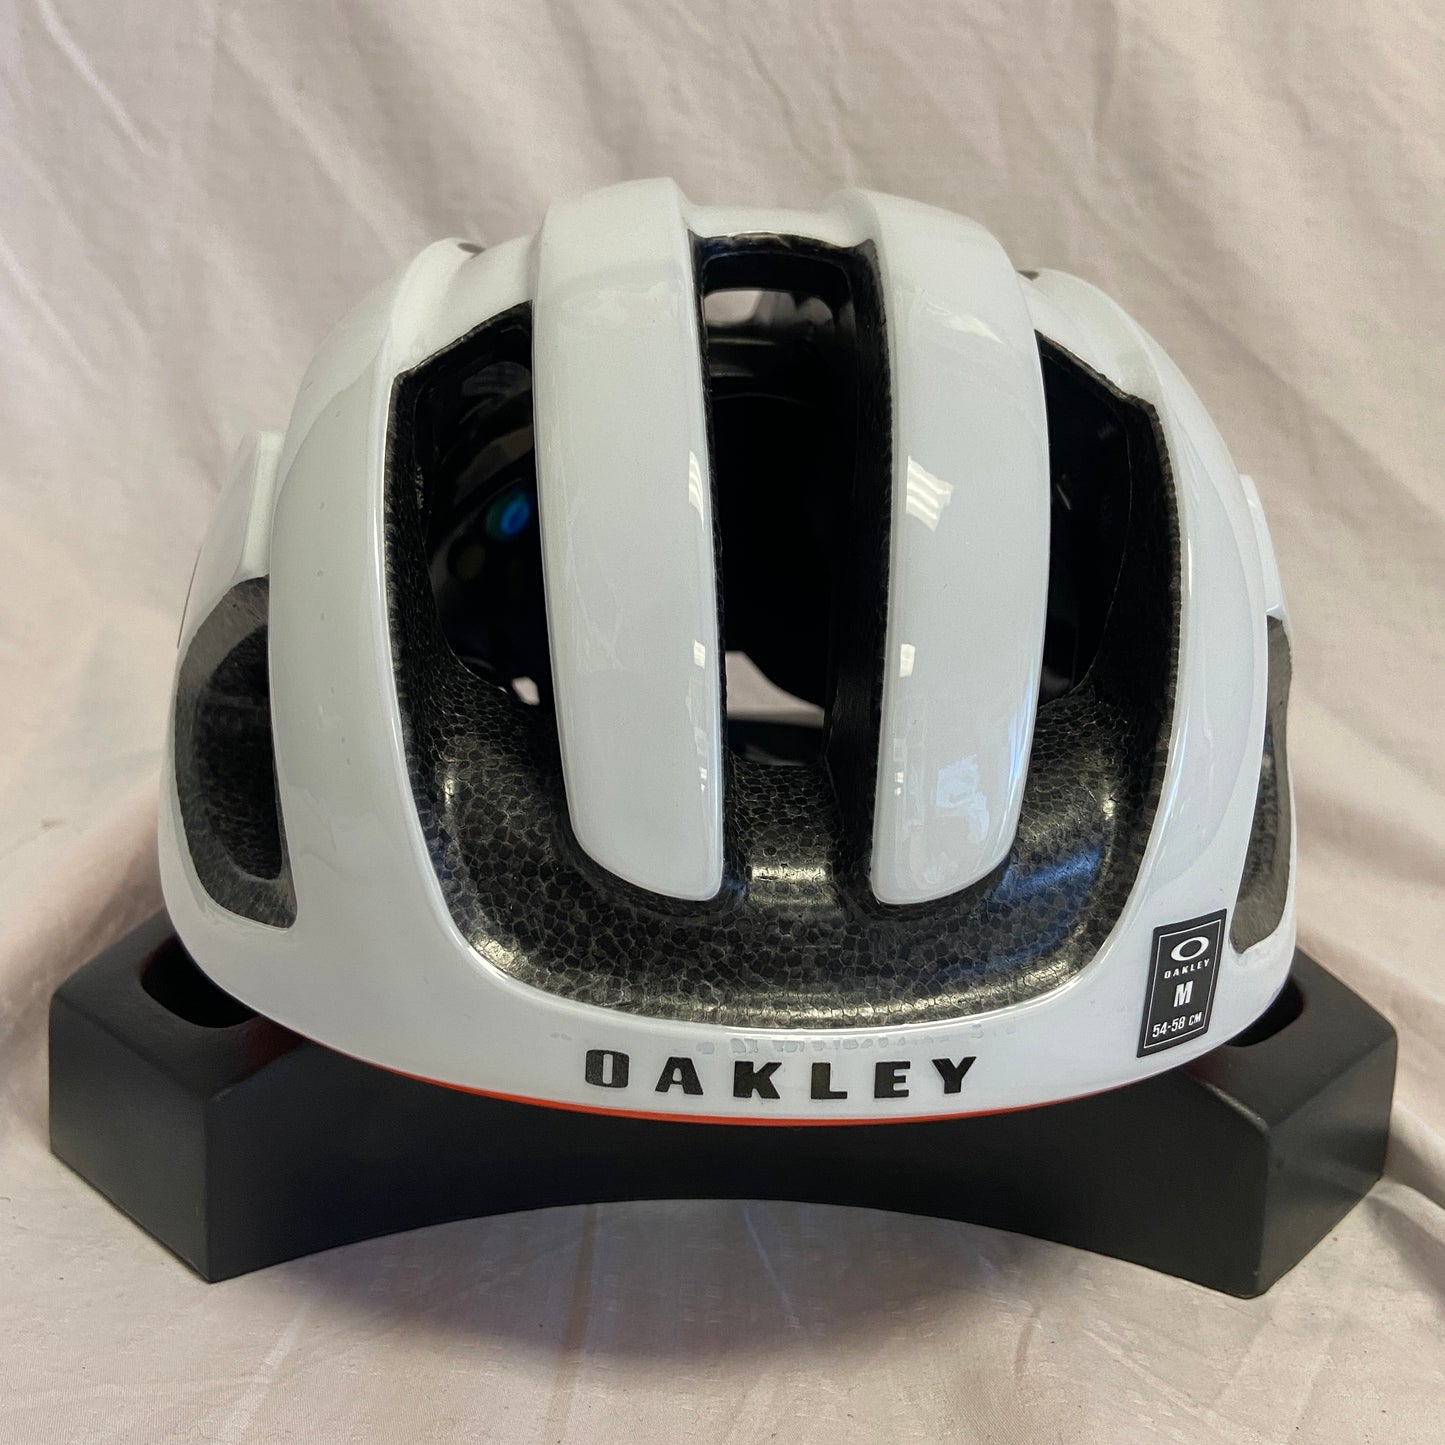 Oakley Aro 3 Cycling Helmet White Neon Orange Medium (Open Box) - ExtremeSupply.com